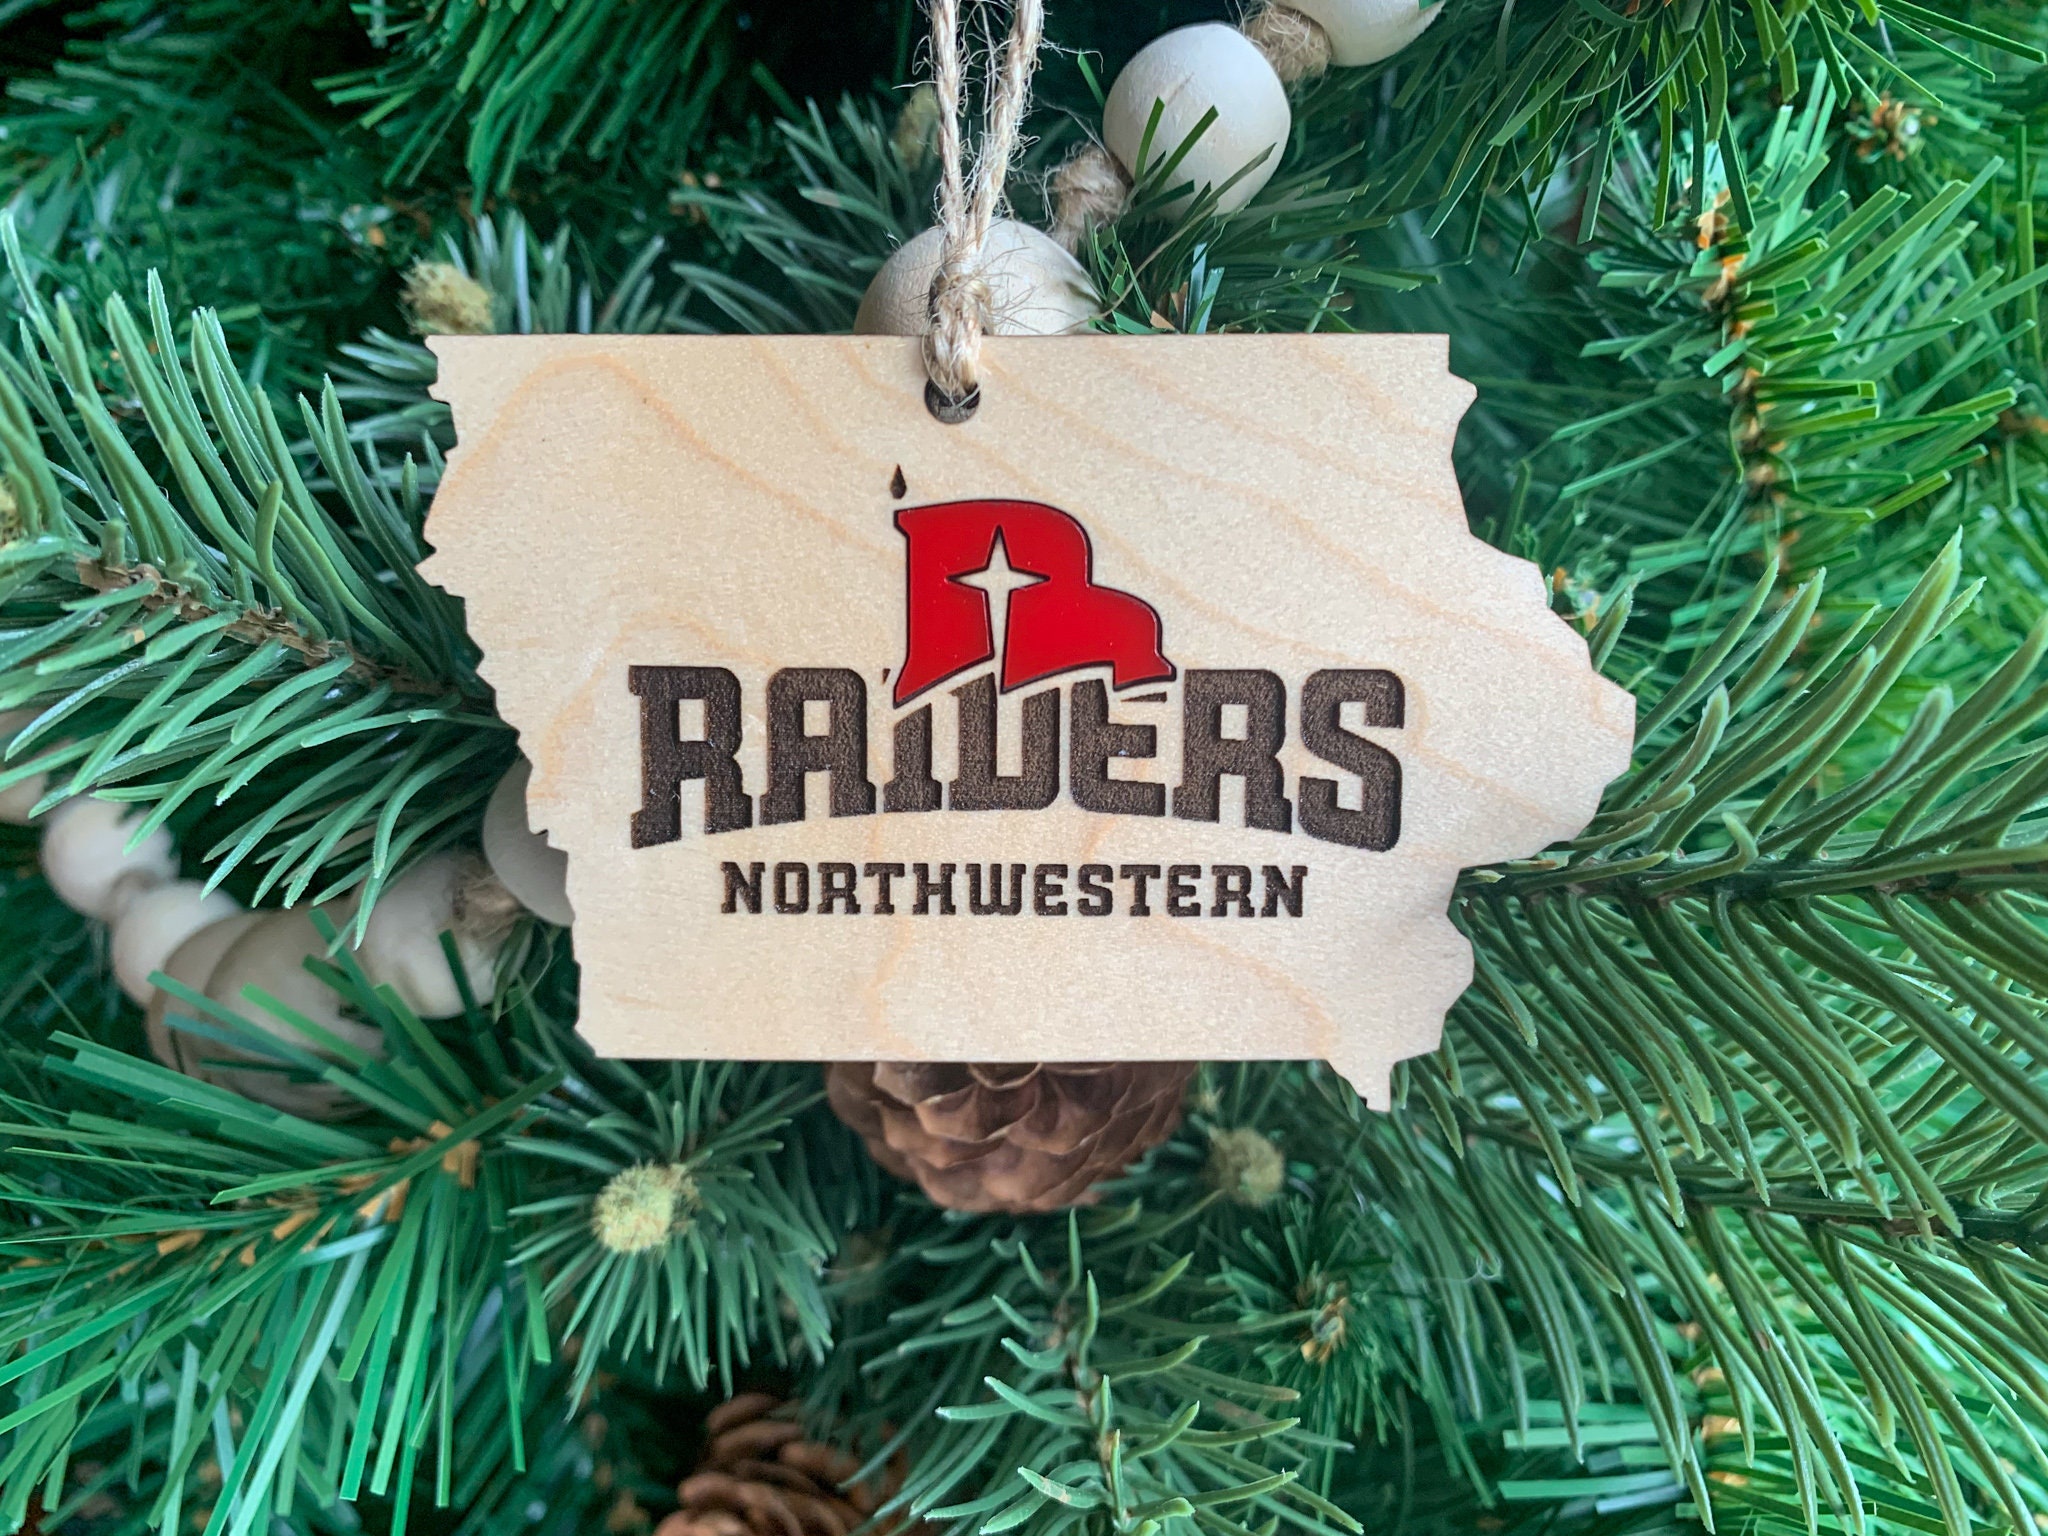 Old World Christmas Las Vegas Raiders Football Ornament For Christmas Tree